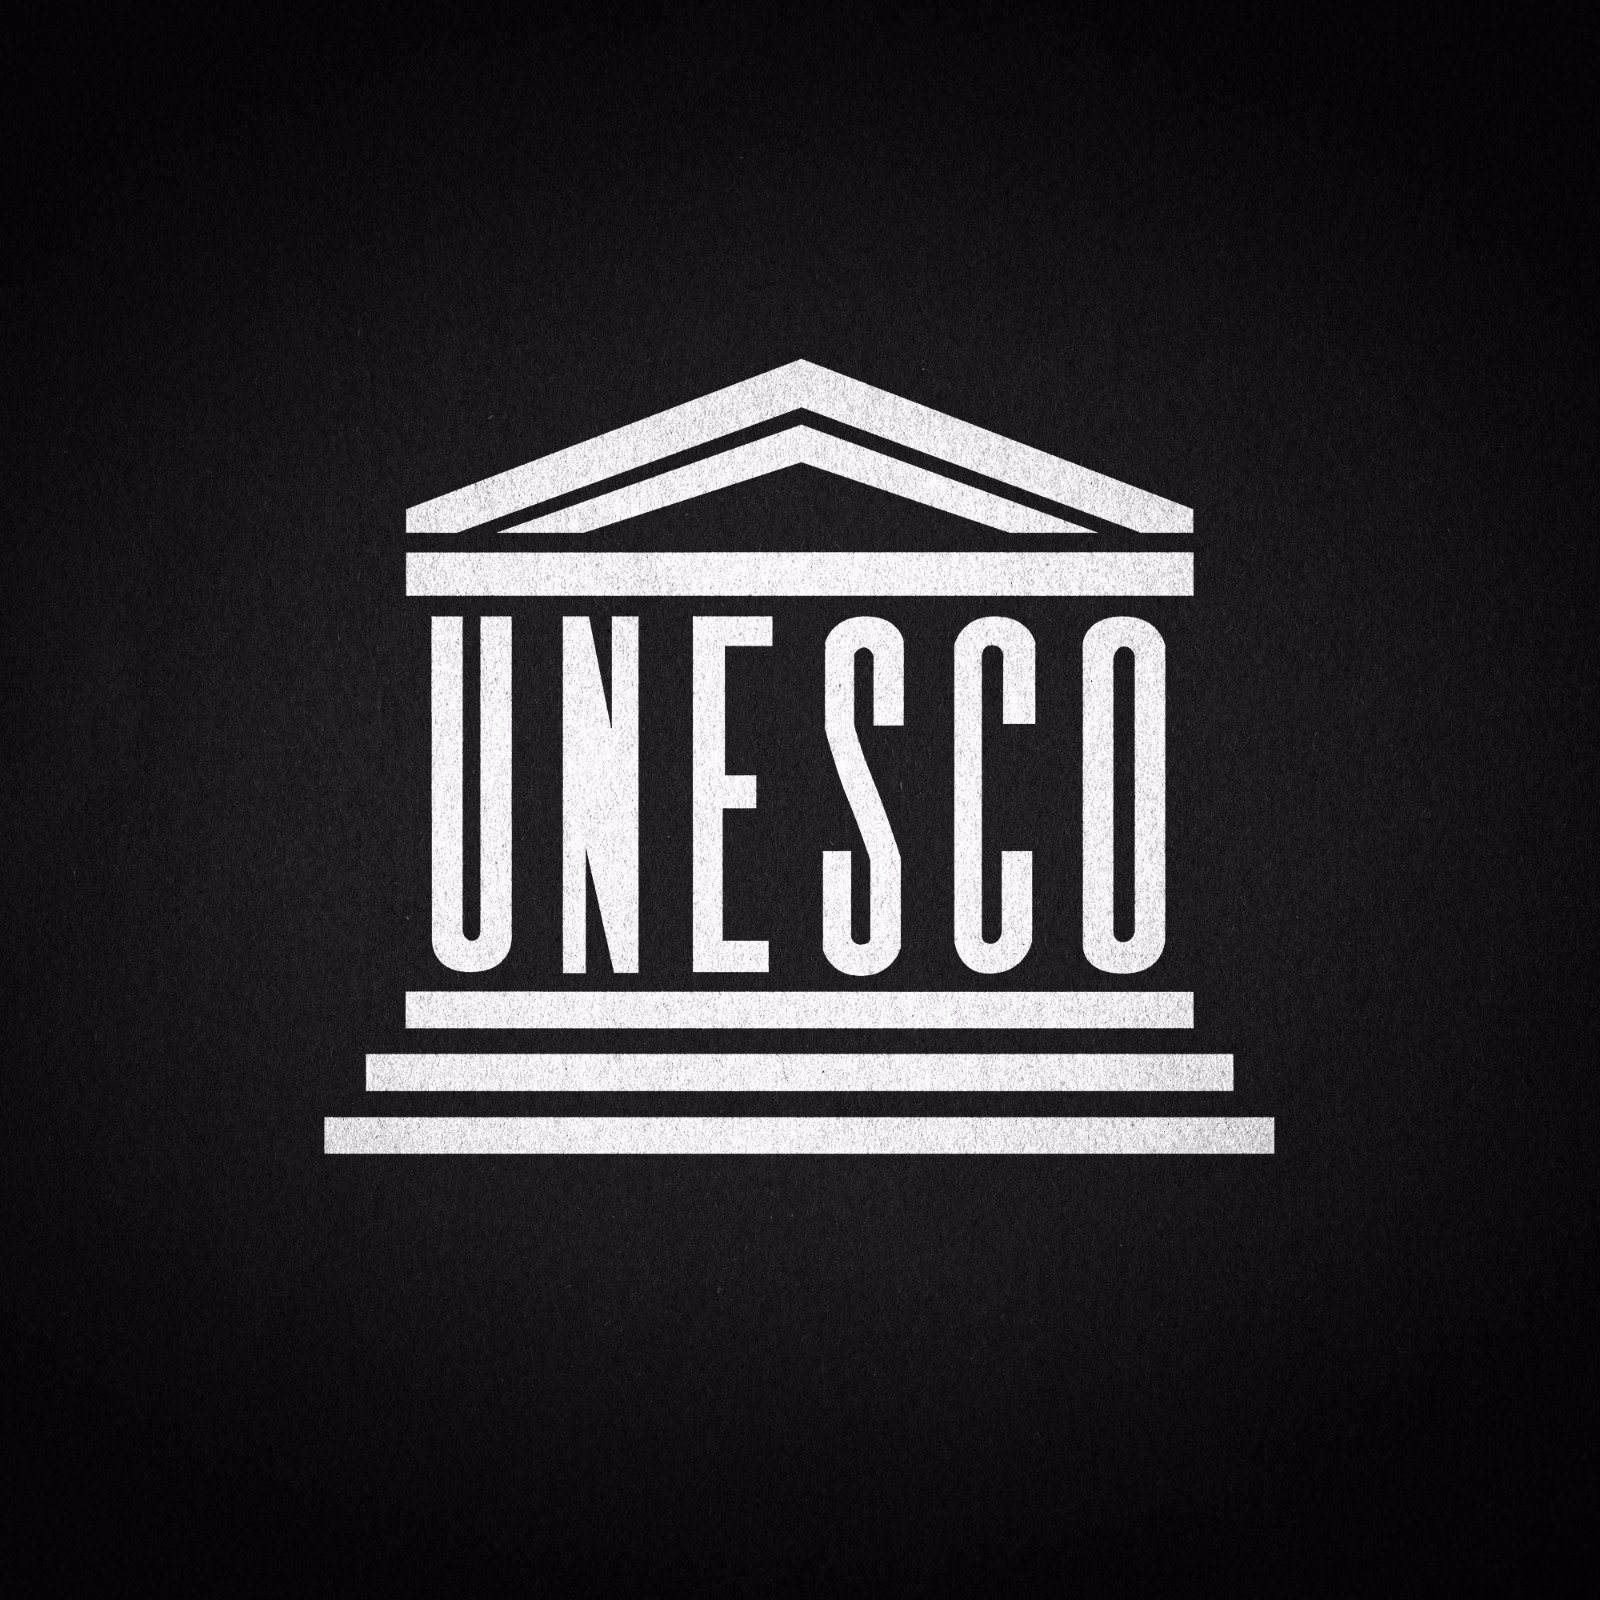 Unesco org. ЮНЕСКО. ЮНЕСКО эмблема. Символ ЮНЕСКО. ЮНЕСКО картинки.